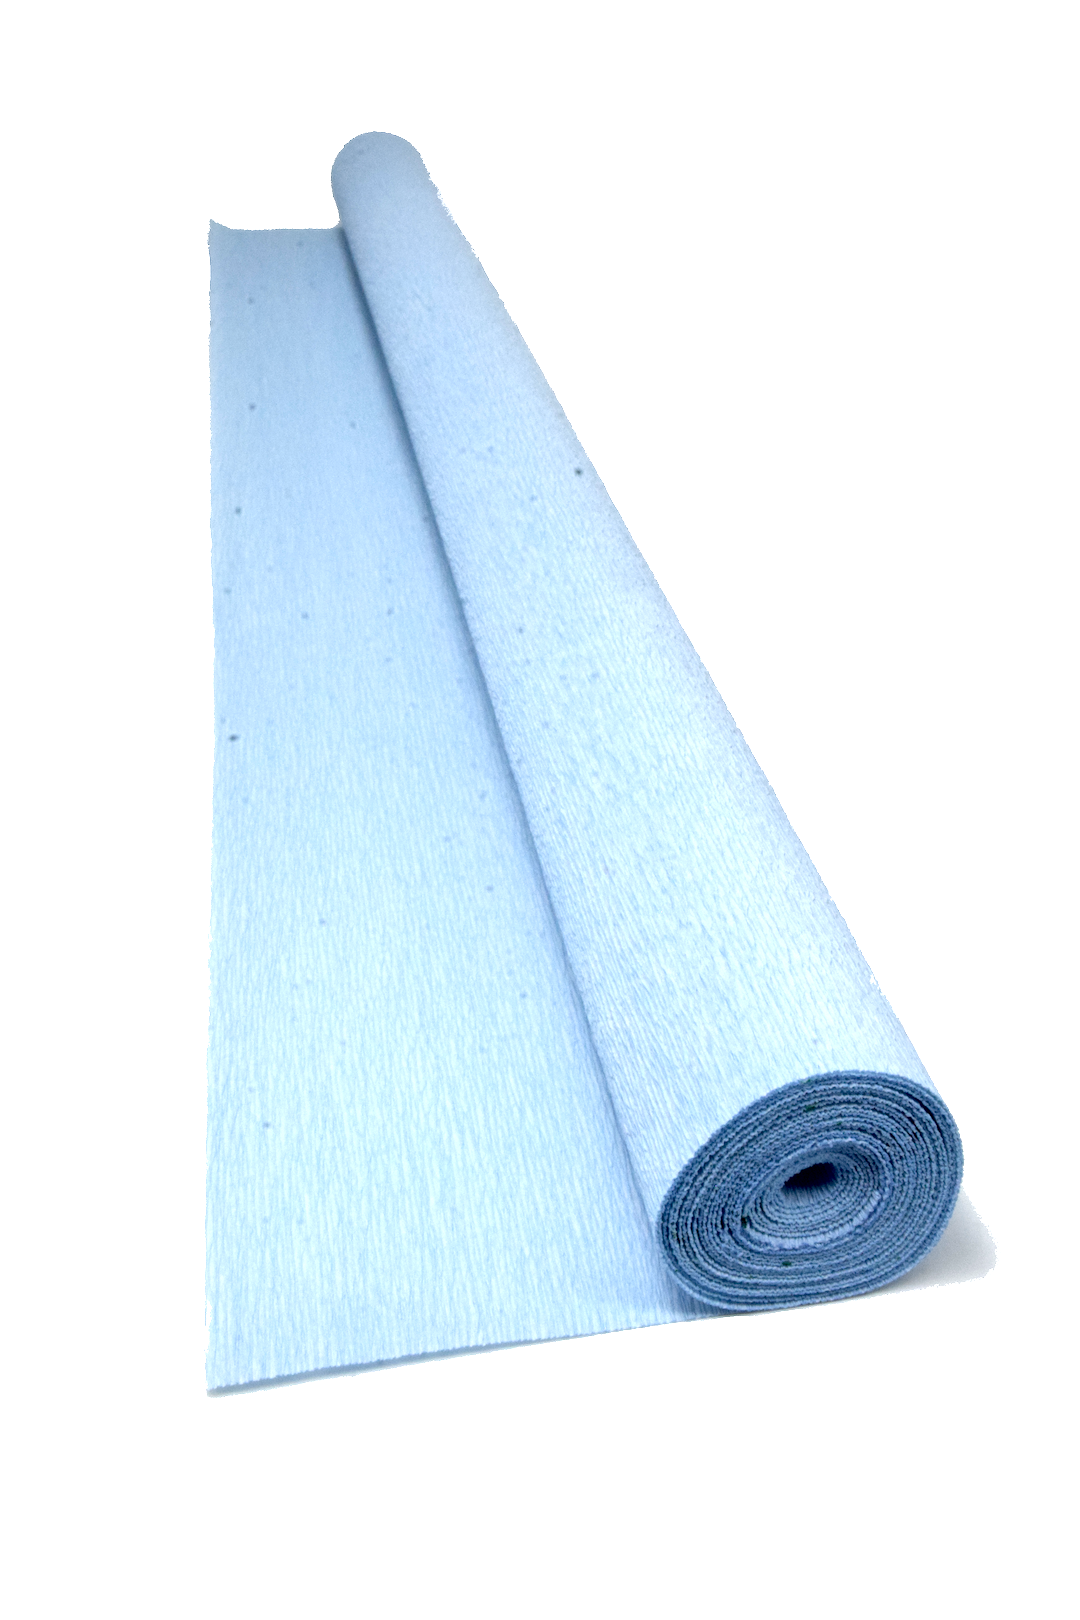 Crepe Paper roll 180 gram - 605/1 BLUE BUBBLE PRINT - Carte Fini